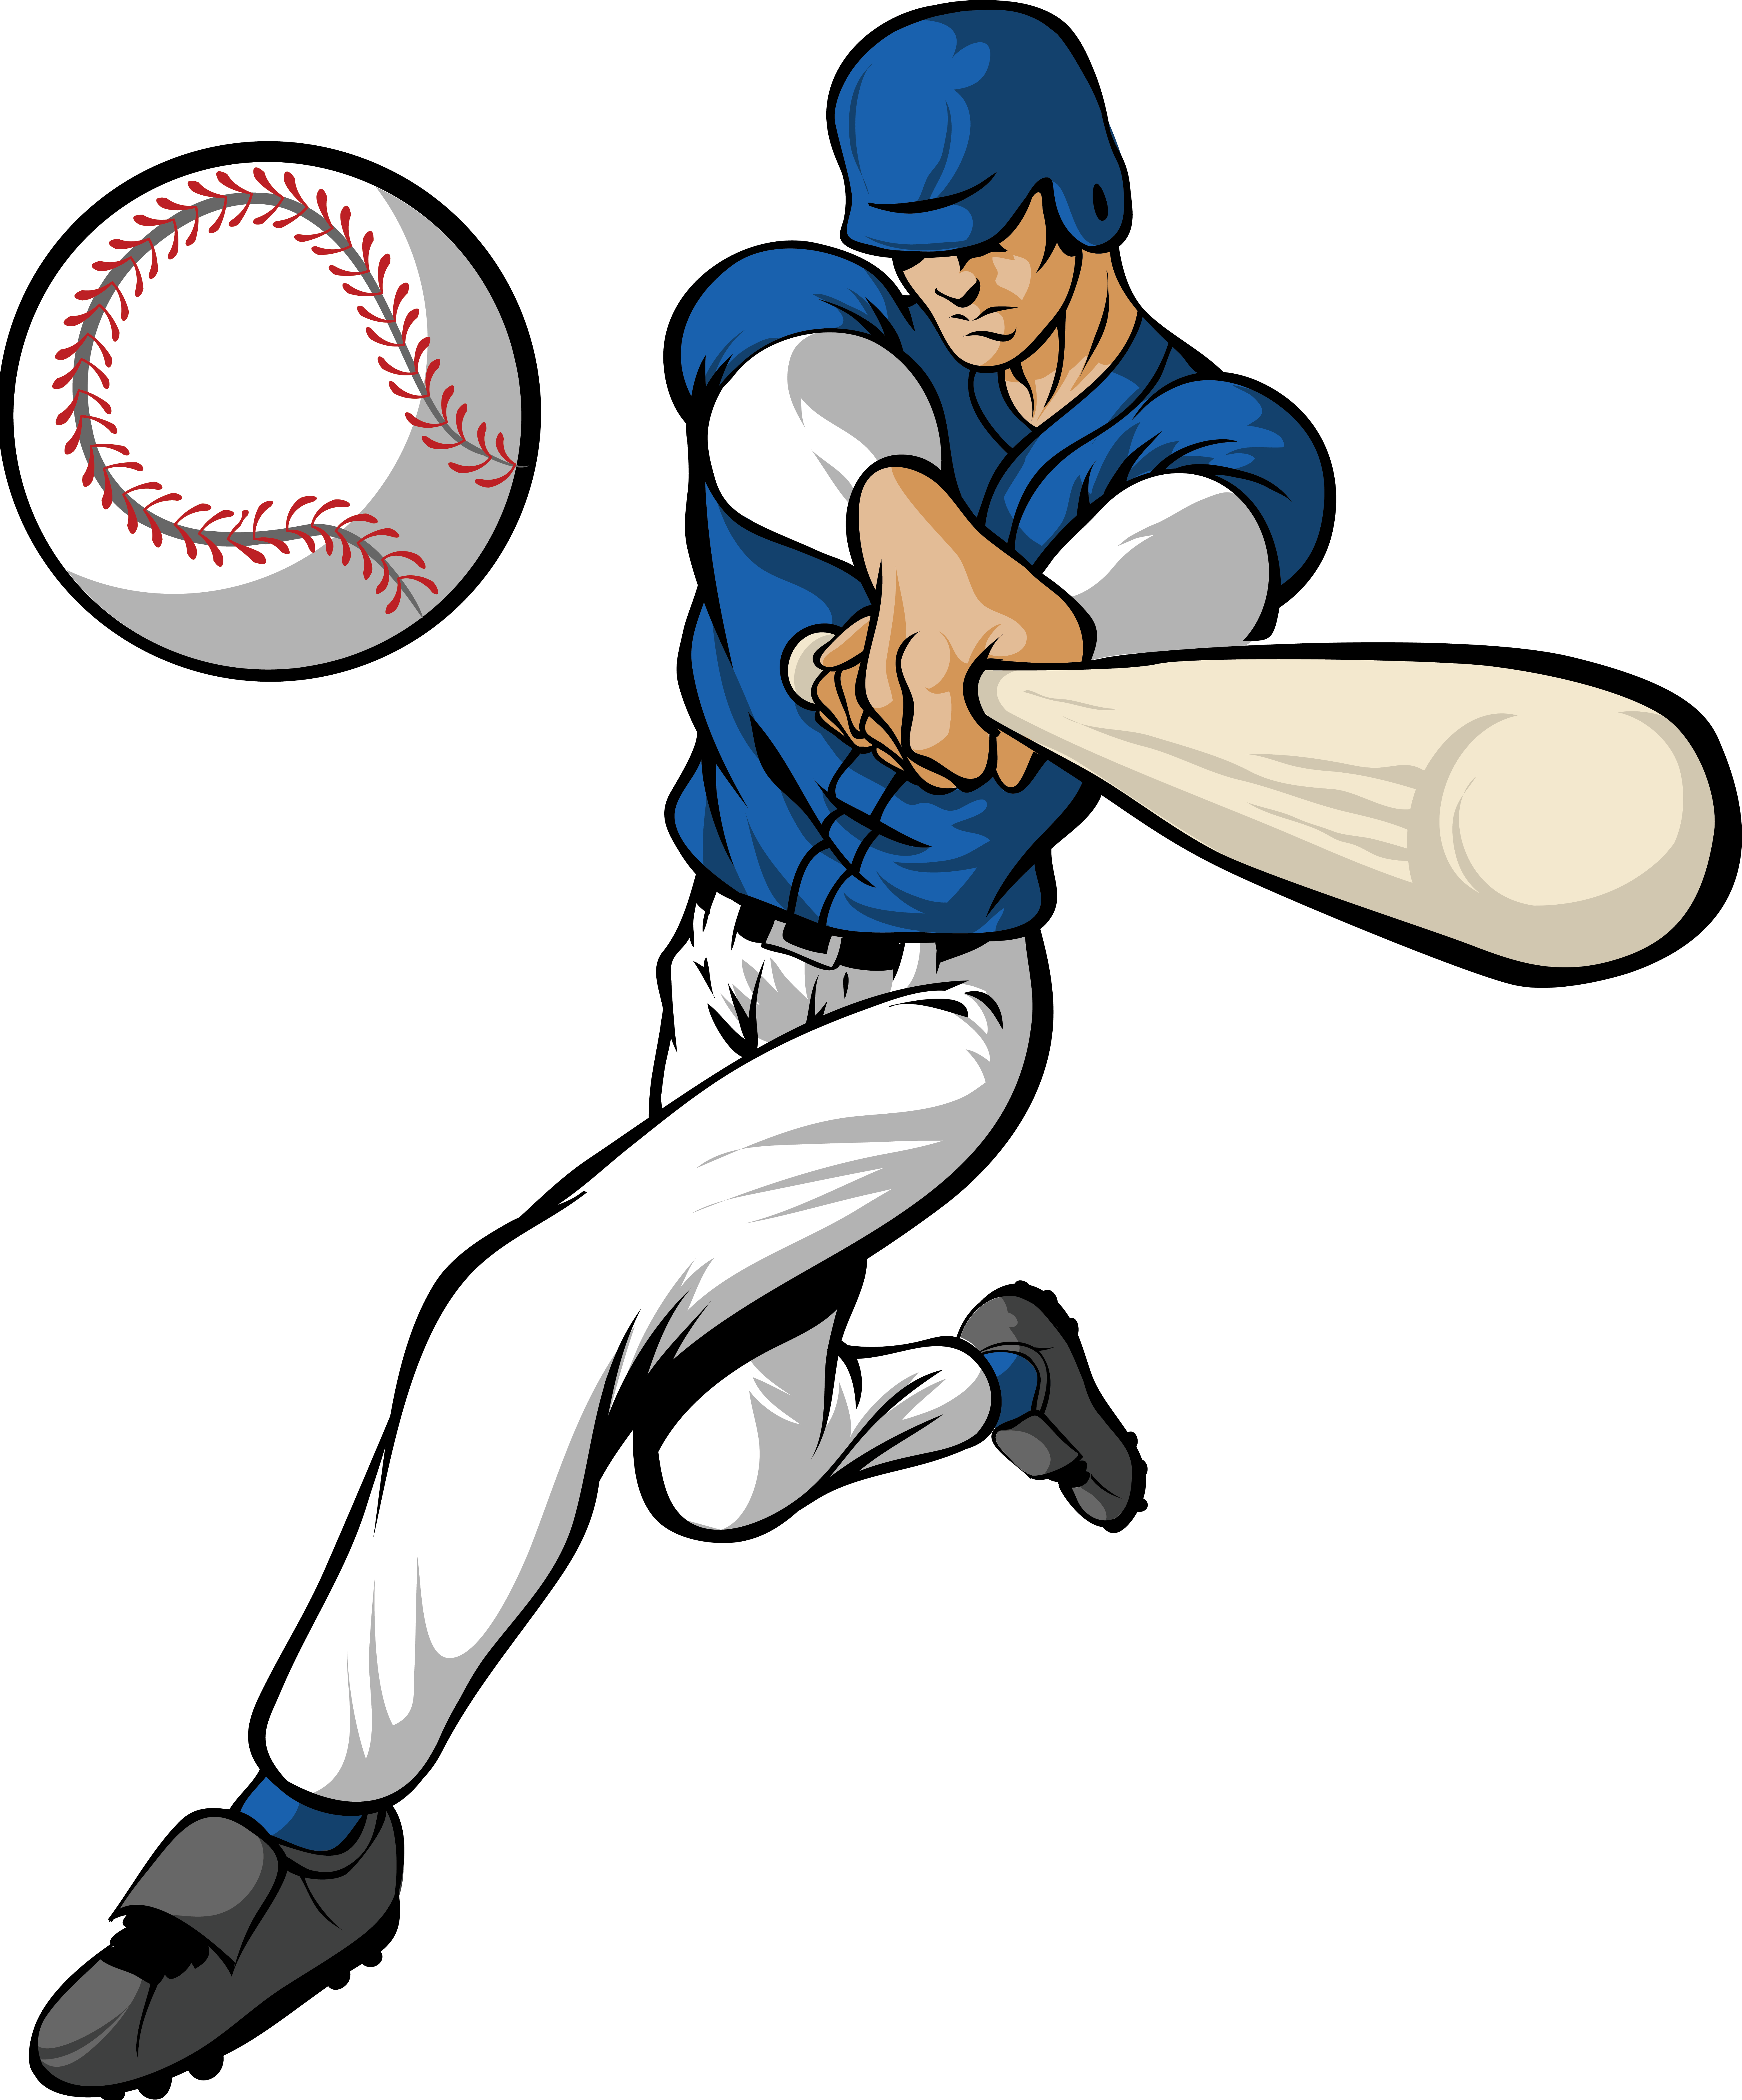 Baseball Player Cartoon Cliparts.co